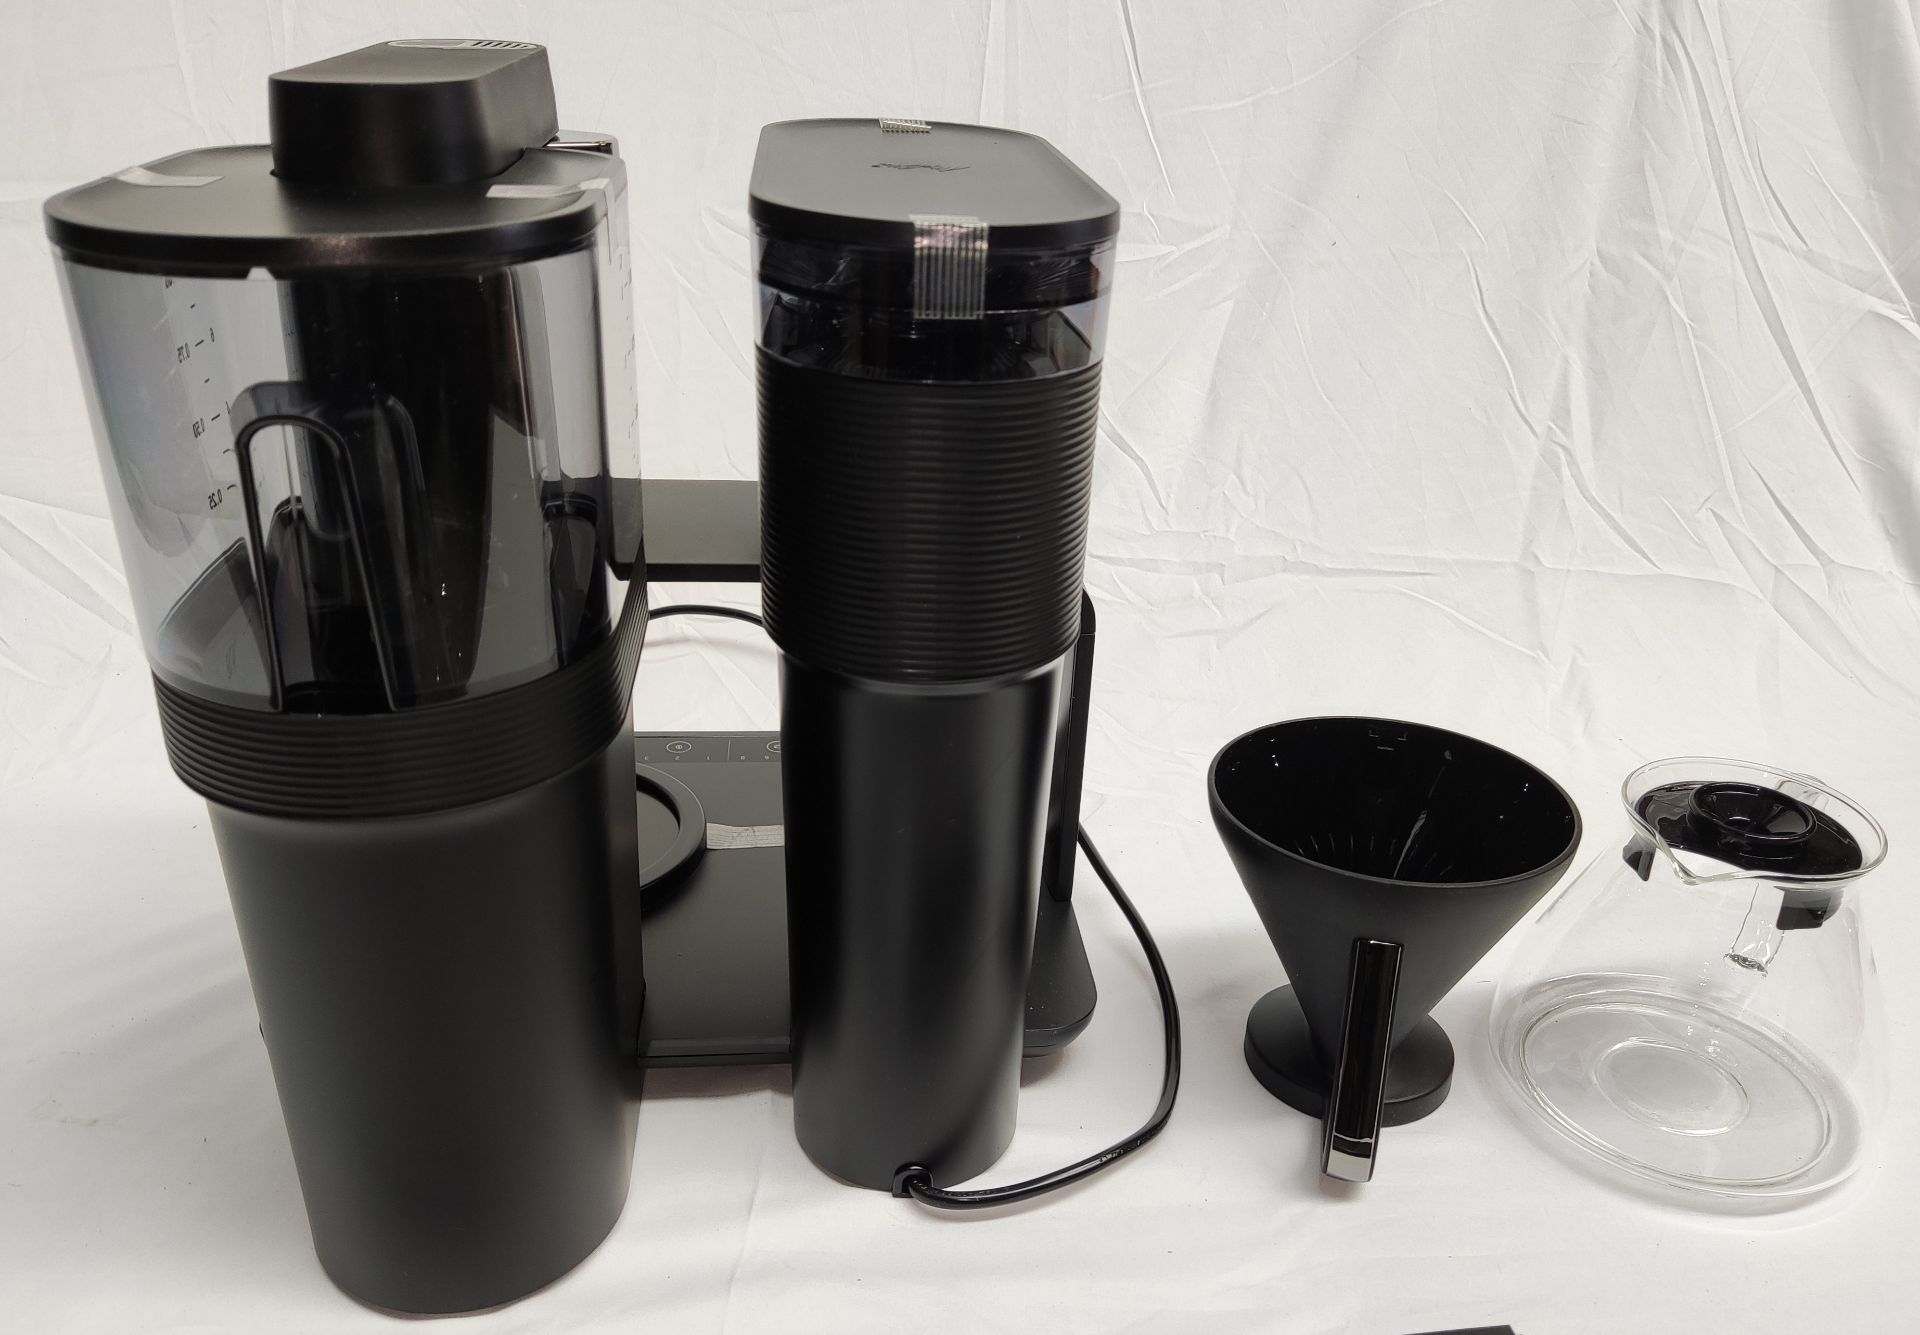 1 x MELITTA Epos Coffee Machine With Grinder - Boxed - Original RRP £399 - Ref: 7129012/HJL350/C19/ - Image 4 of 14